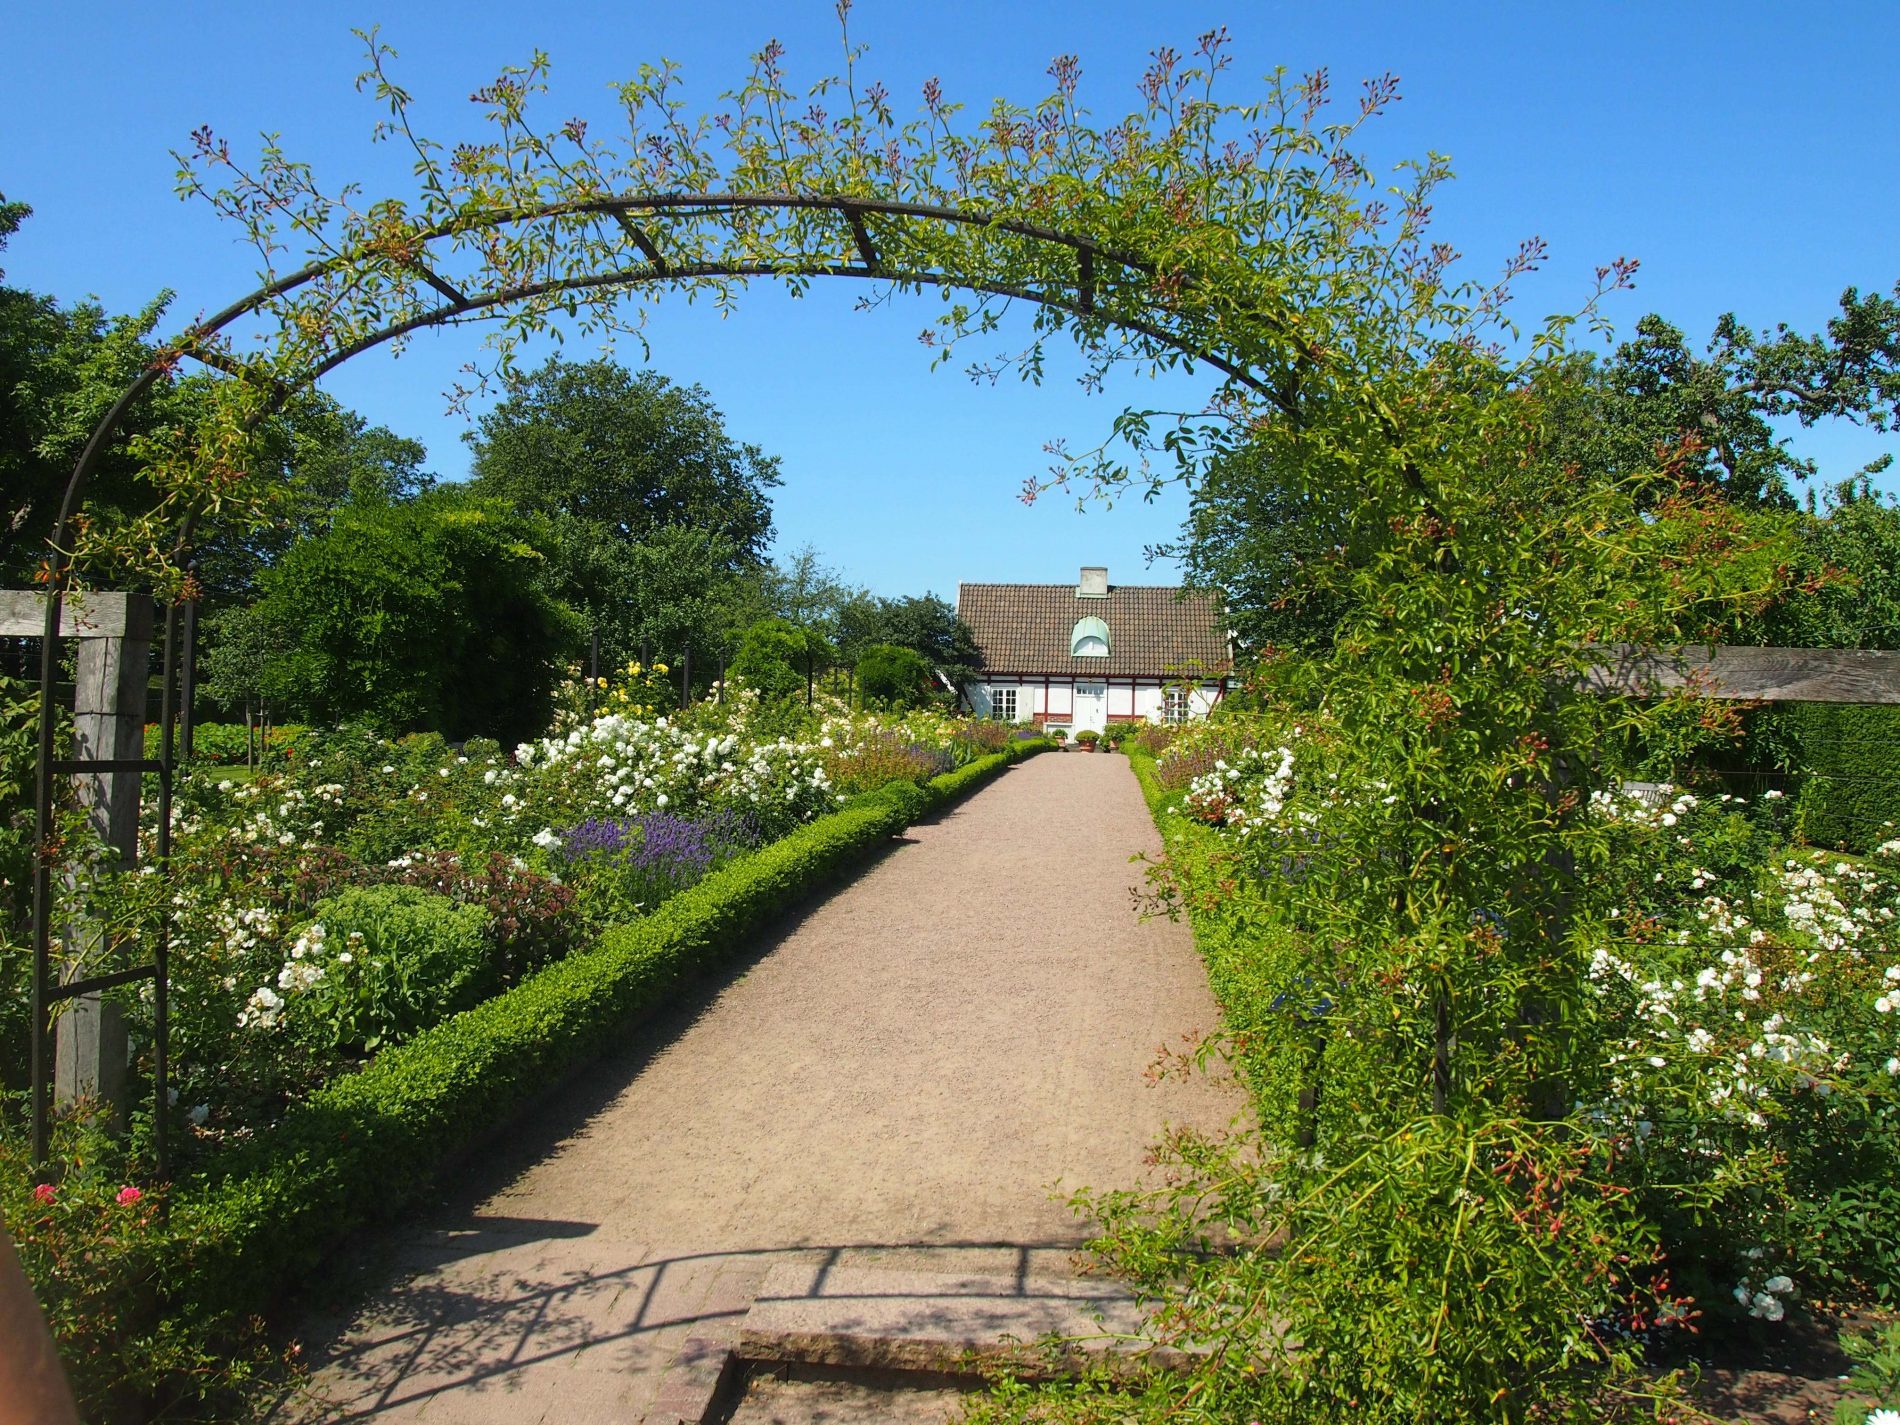 The gardens at Fredriksdal